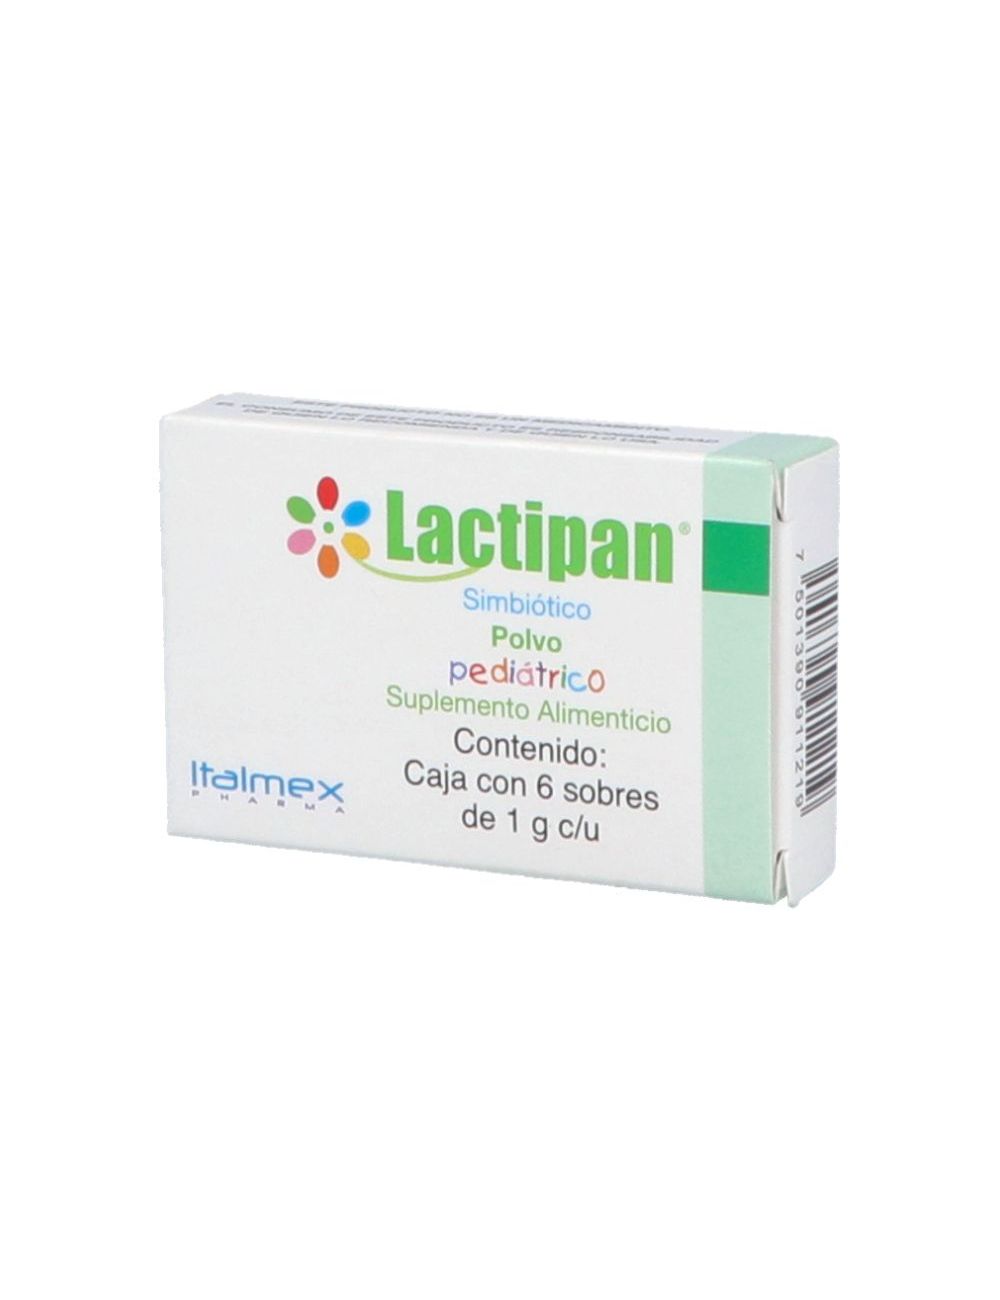 Lactipan (Simbiótico) Polvo Cja/6 sobs 1g c/u